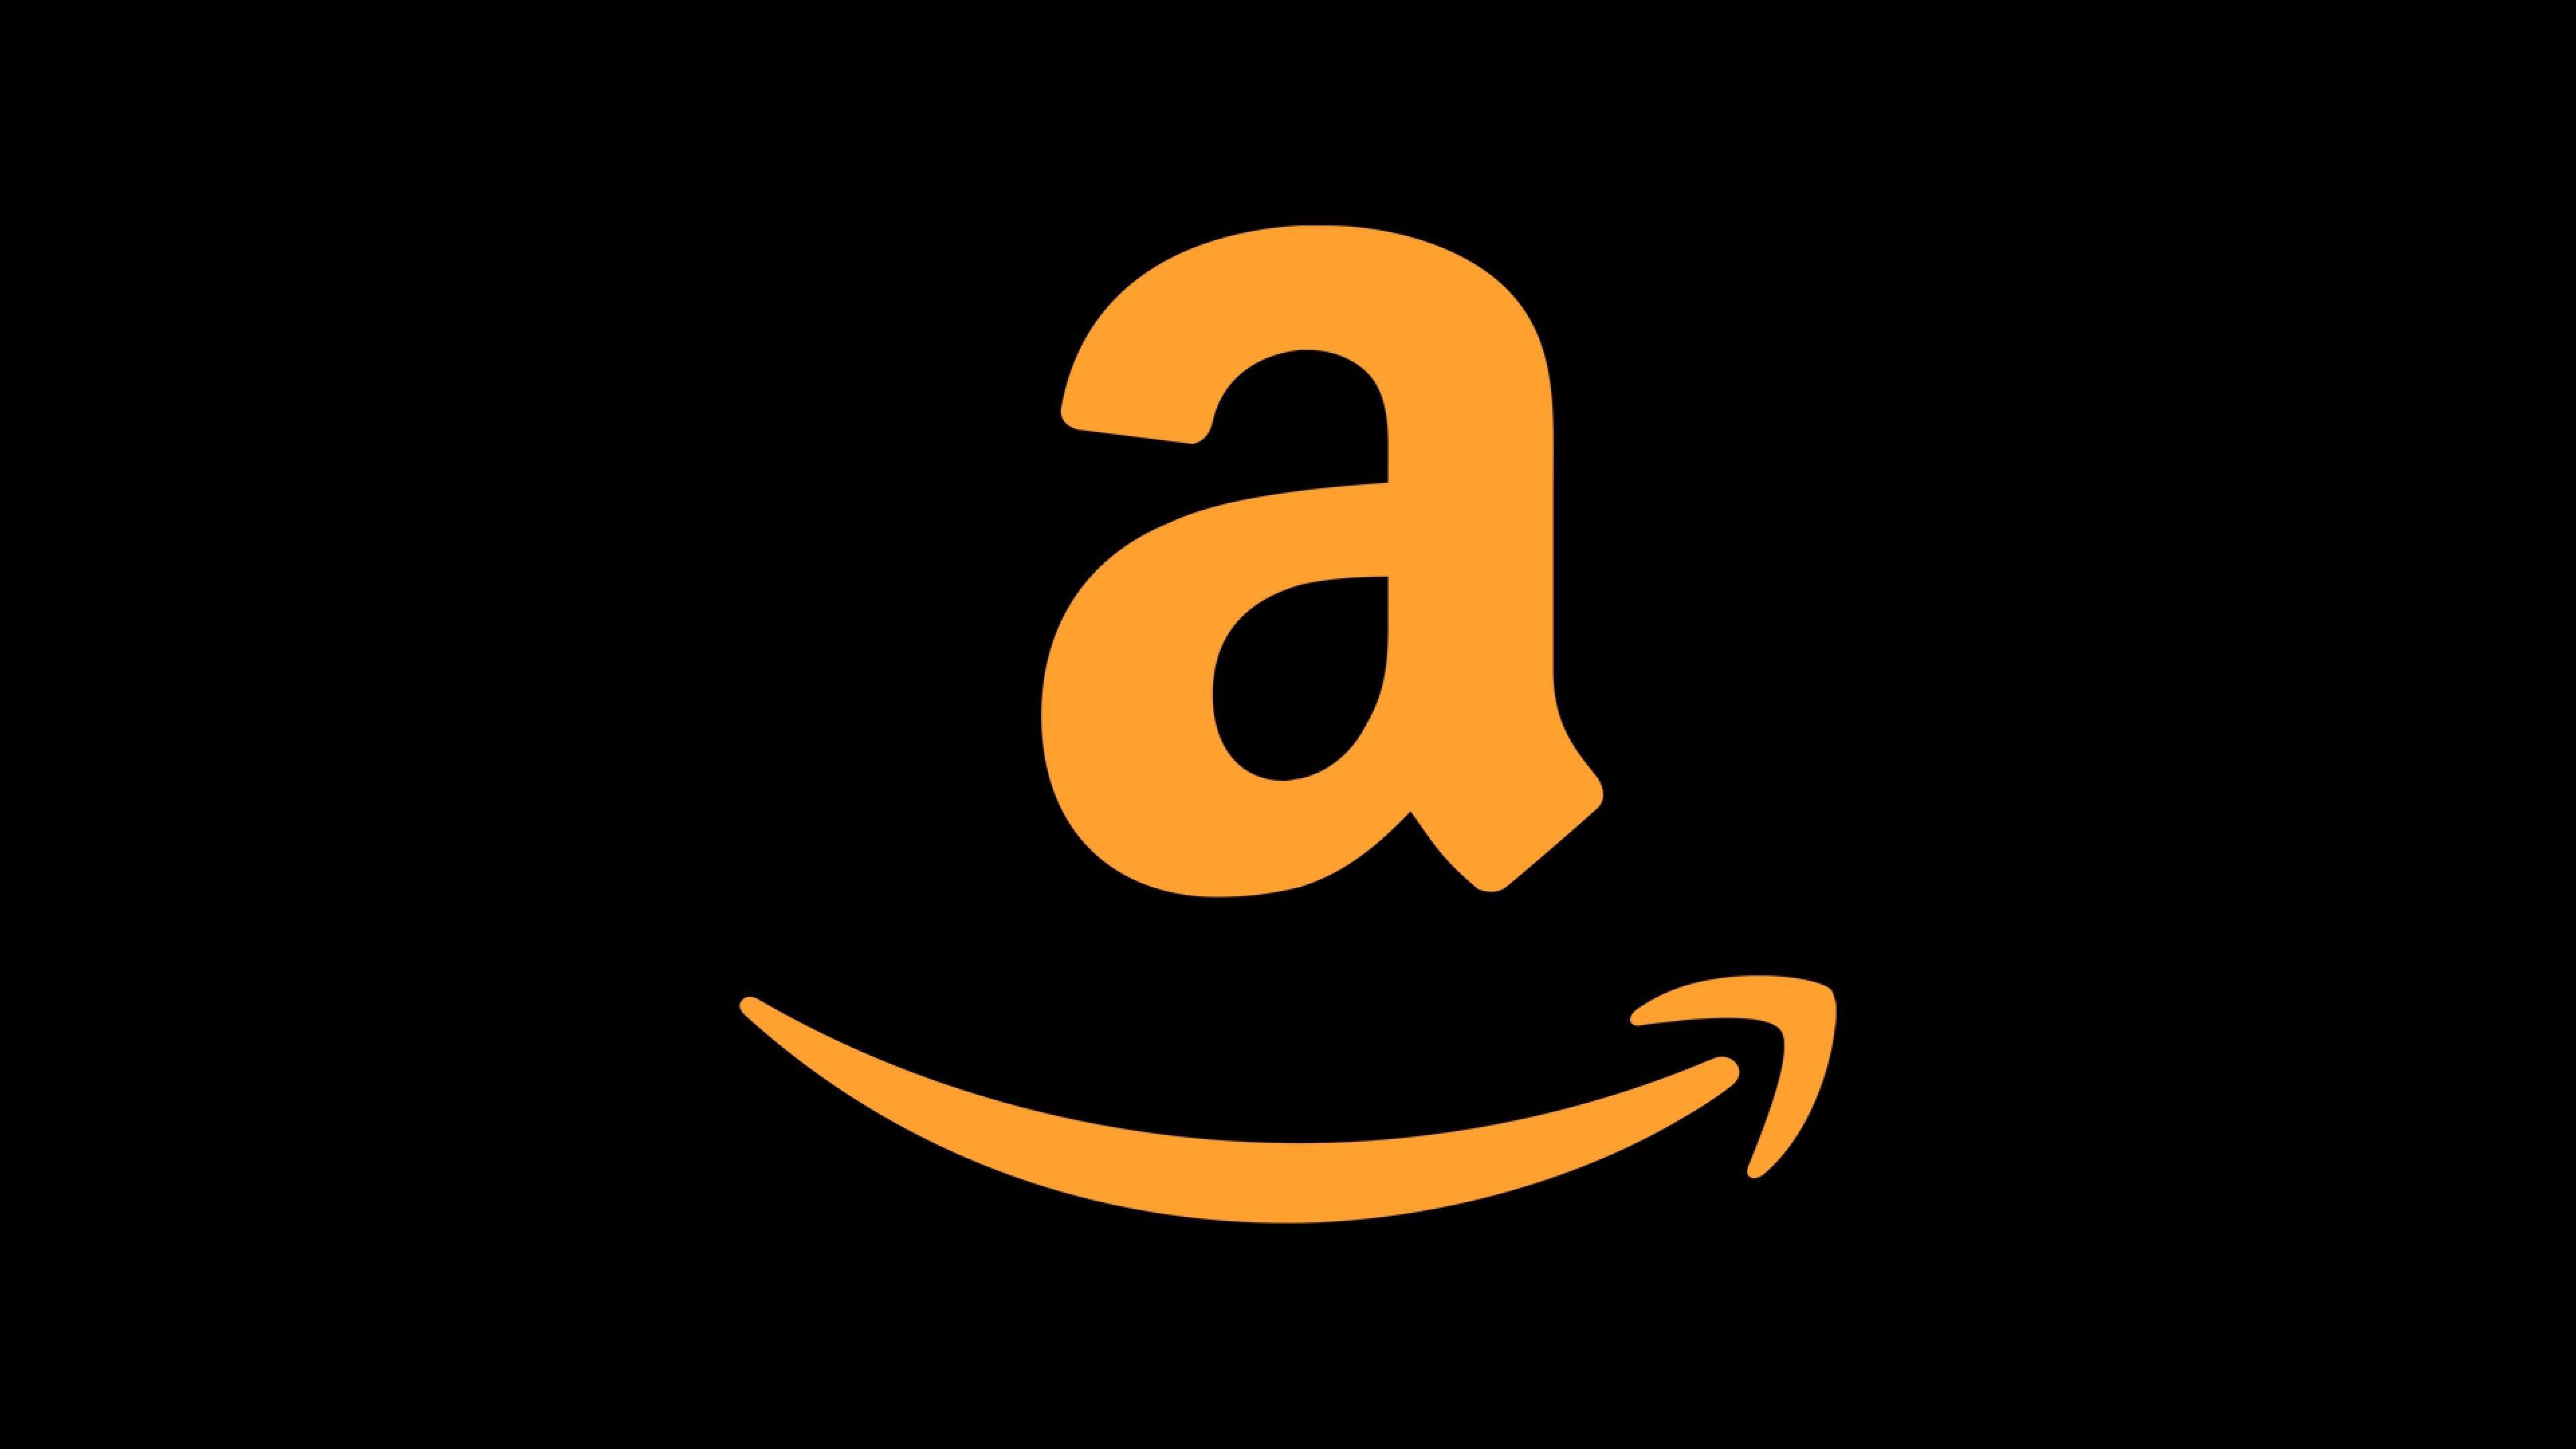 Amazong Logo - Amazon 4k Logo, HD Logo, 4k Wallpapers, Images, Backgrounds, Photos ...